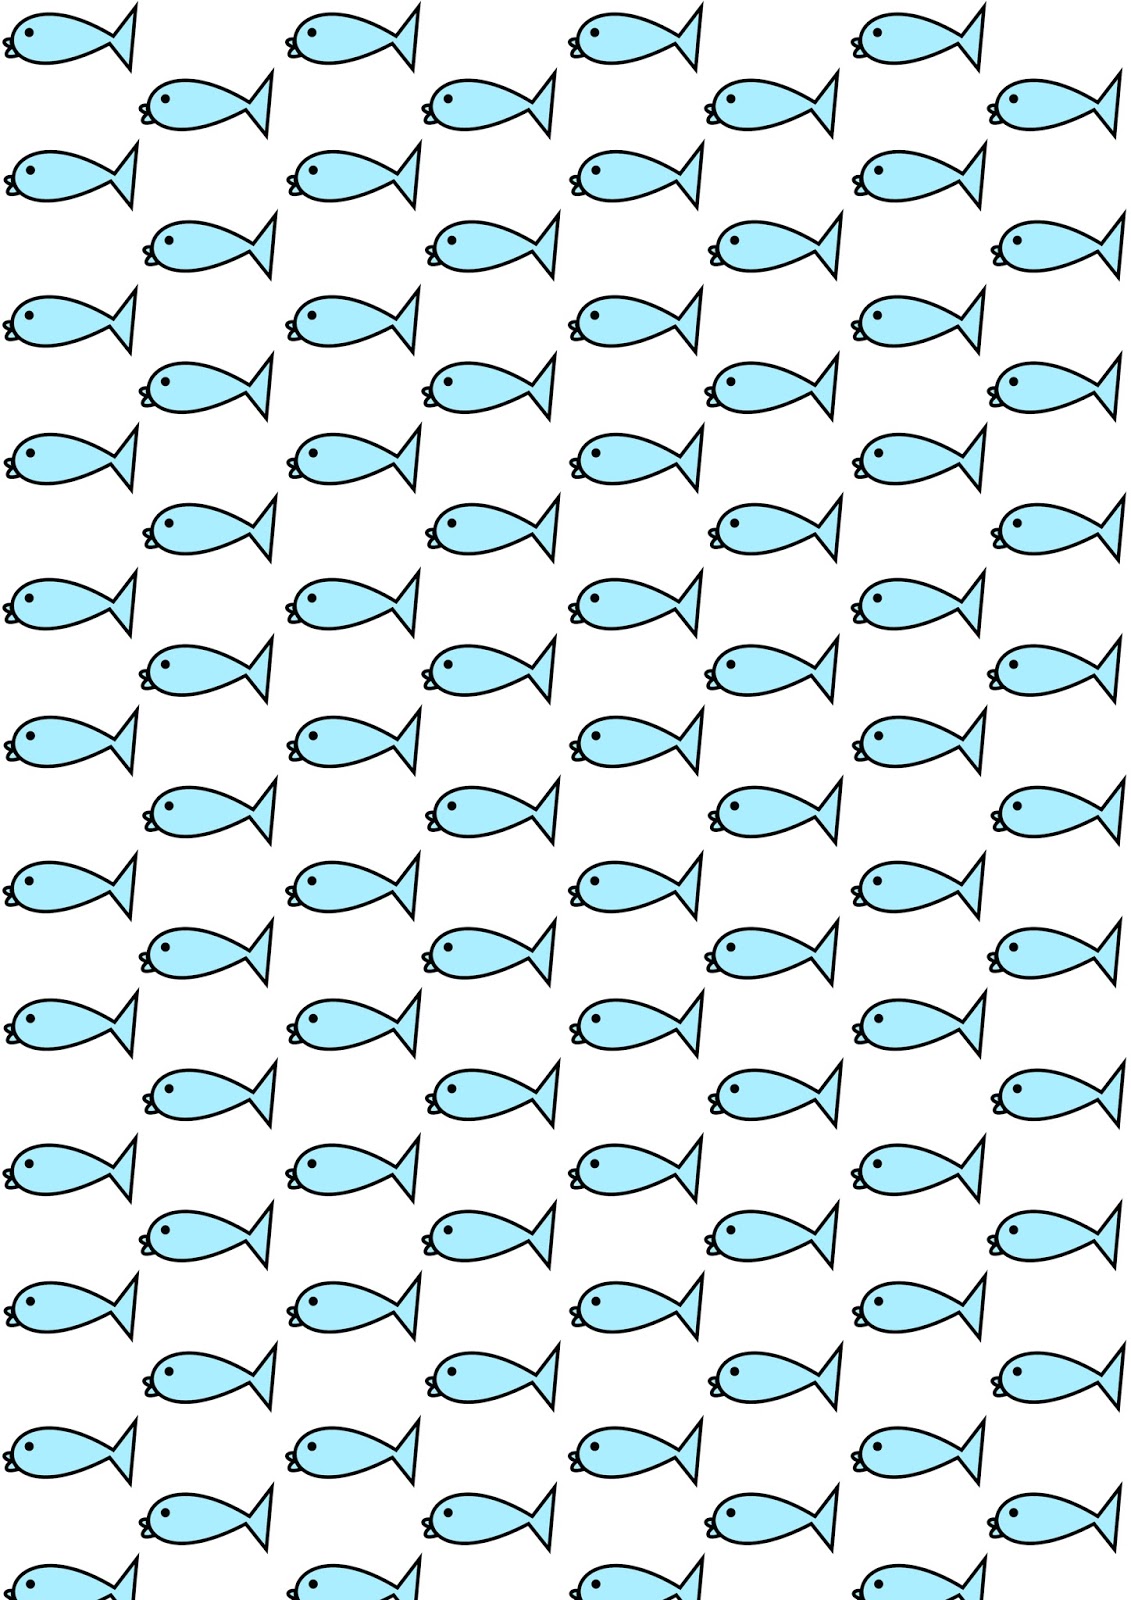 http://4.bp.blogspot.com/-vdlYyWIk3WA/VUTToTkiXRI/AAAAAAAAiuM/OP7YUyN1SdI/s1600/blue_fish_pattern_paper_A4.jpg